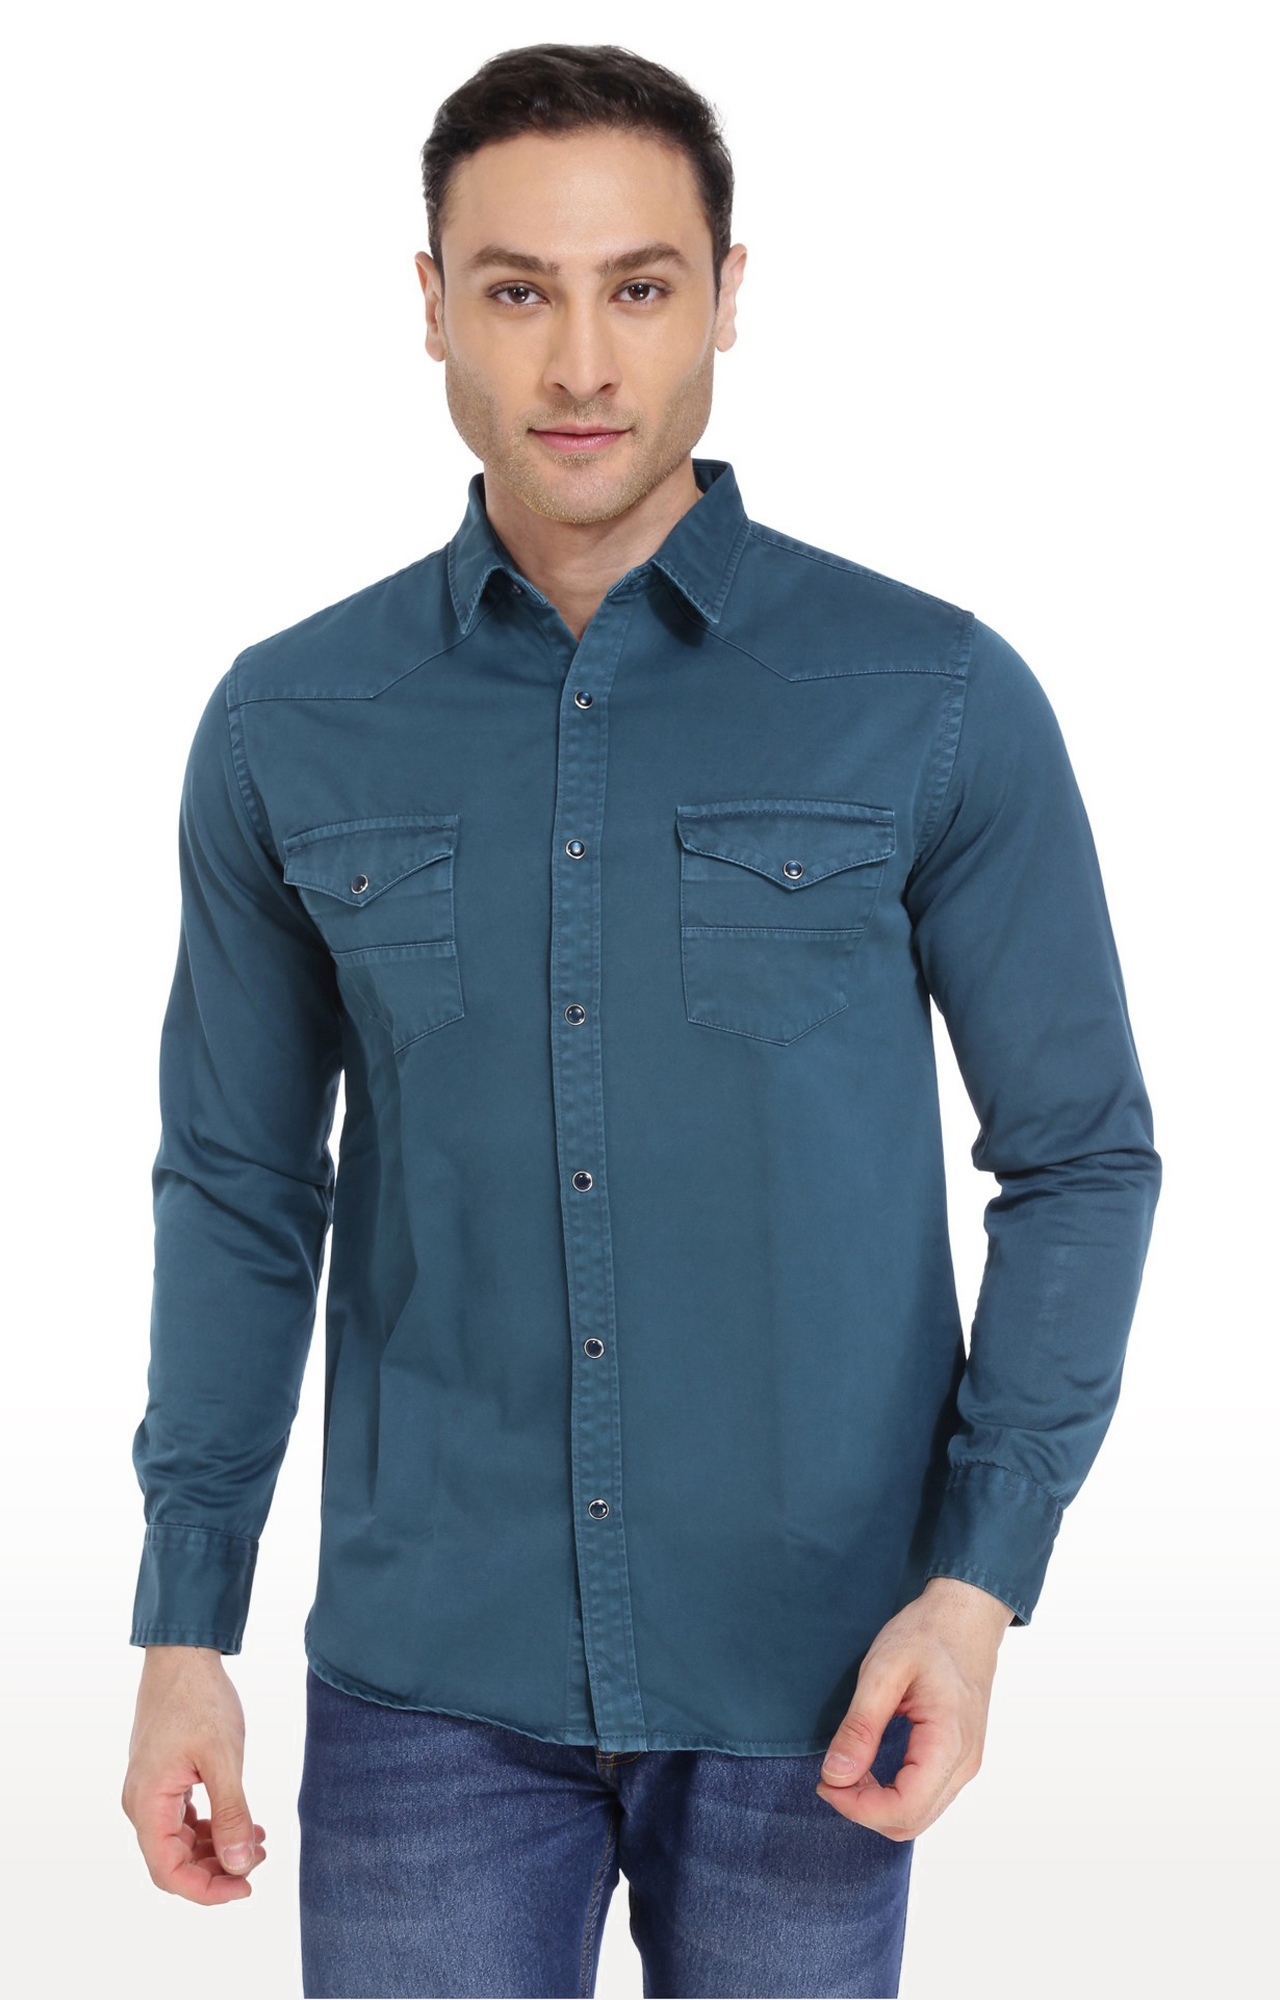 Southbay Men's Teal Blue Casual Denim Shirt